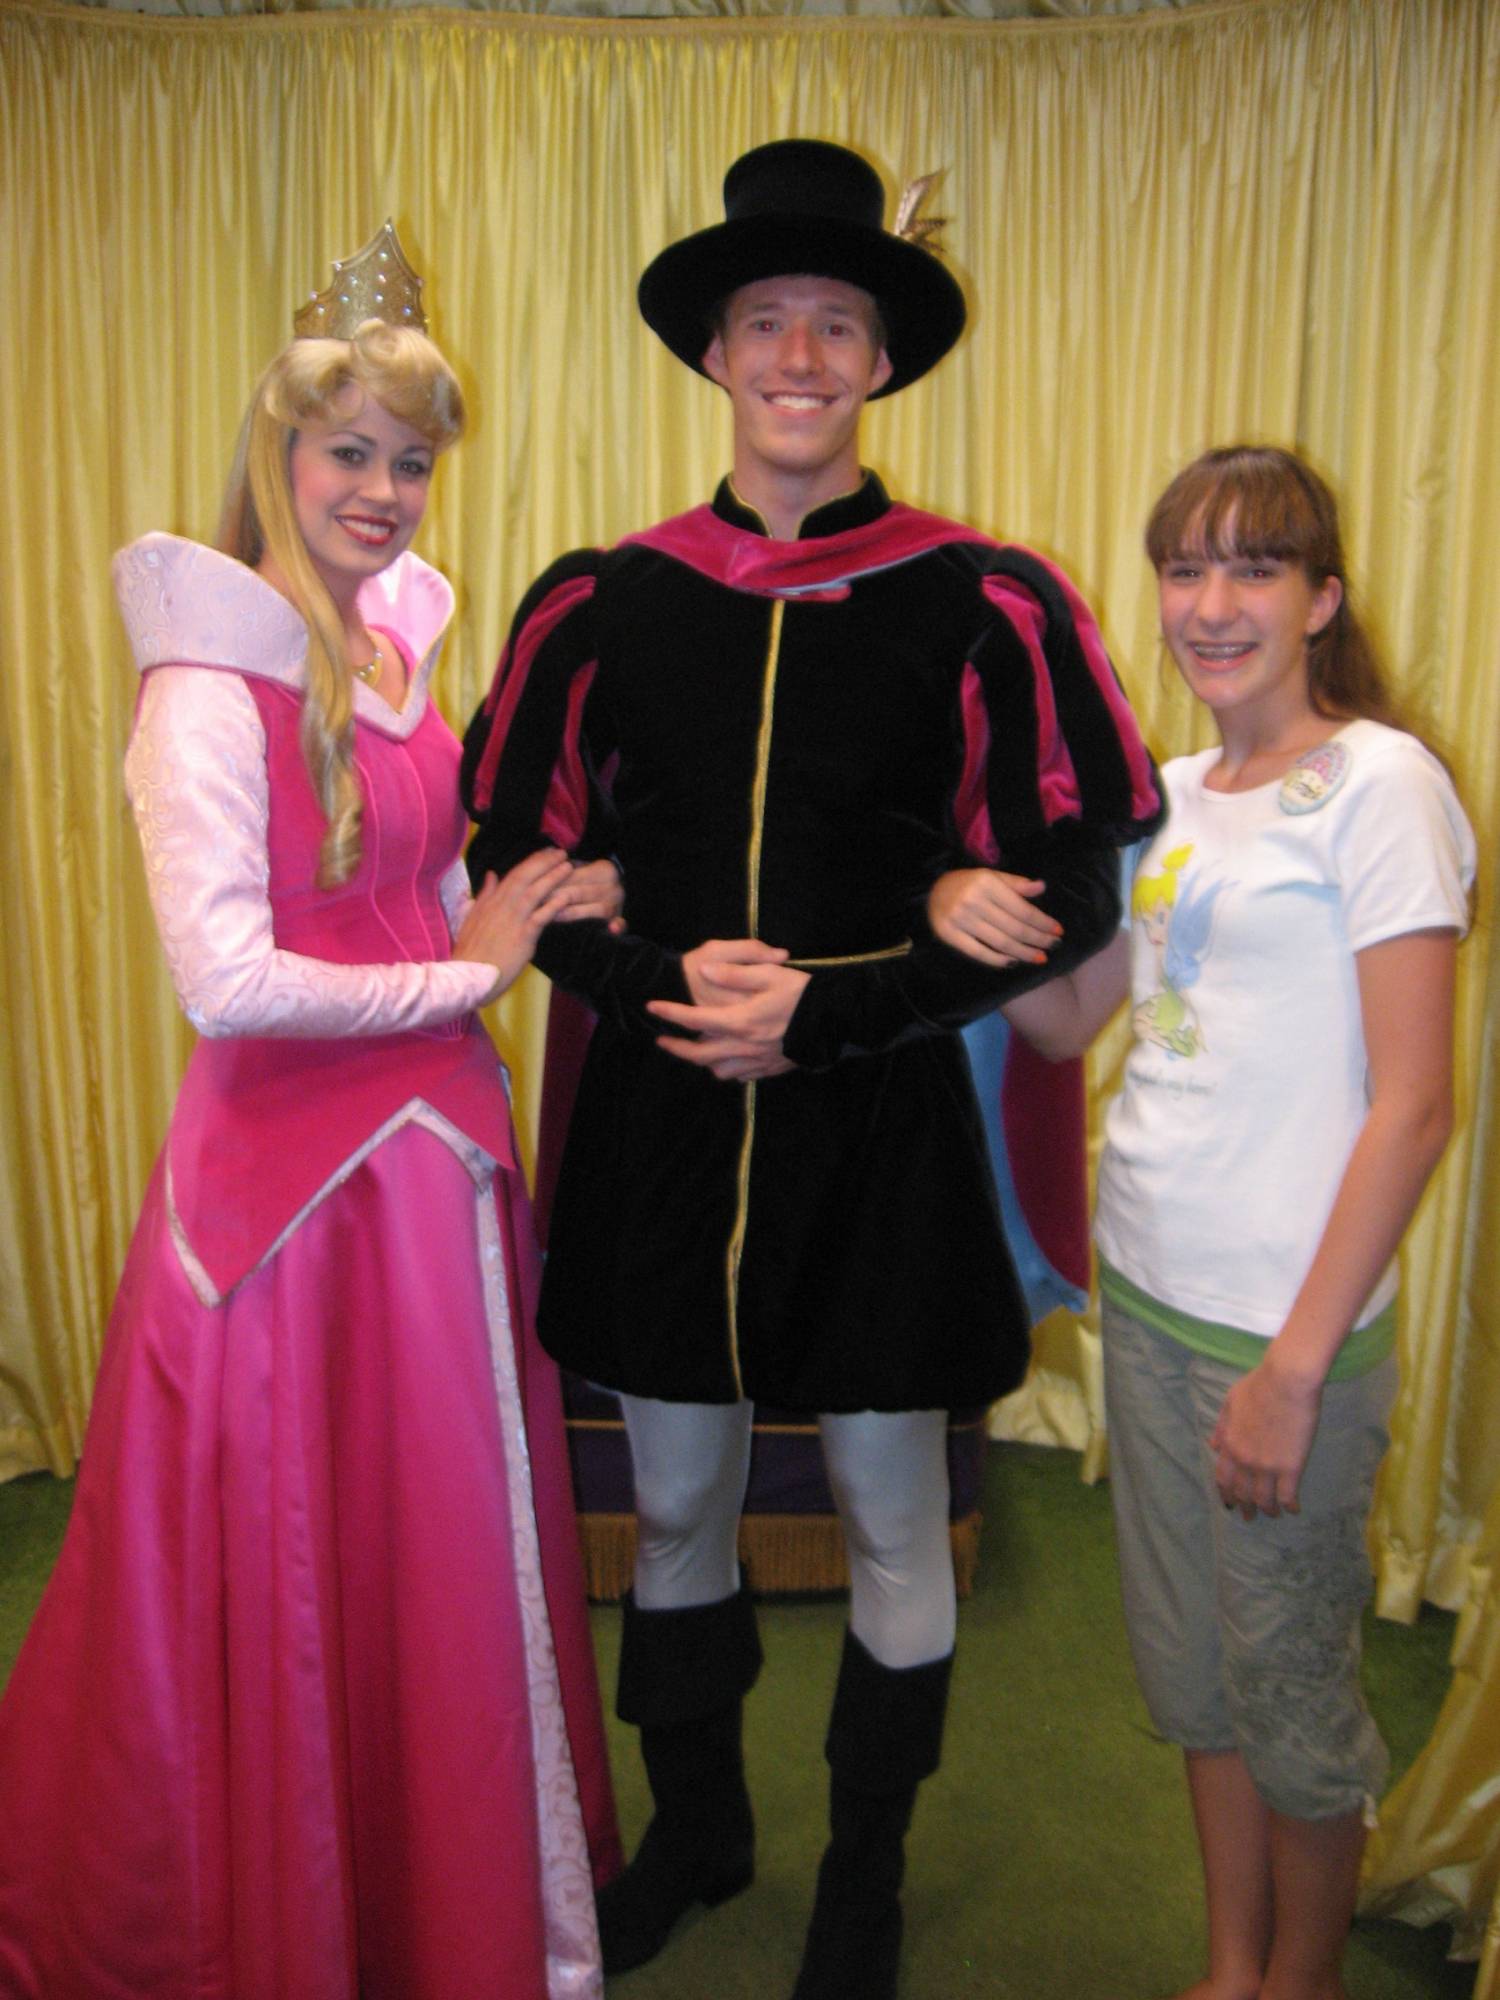 Magic Kingdom - Princess Aurora and her Prince